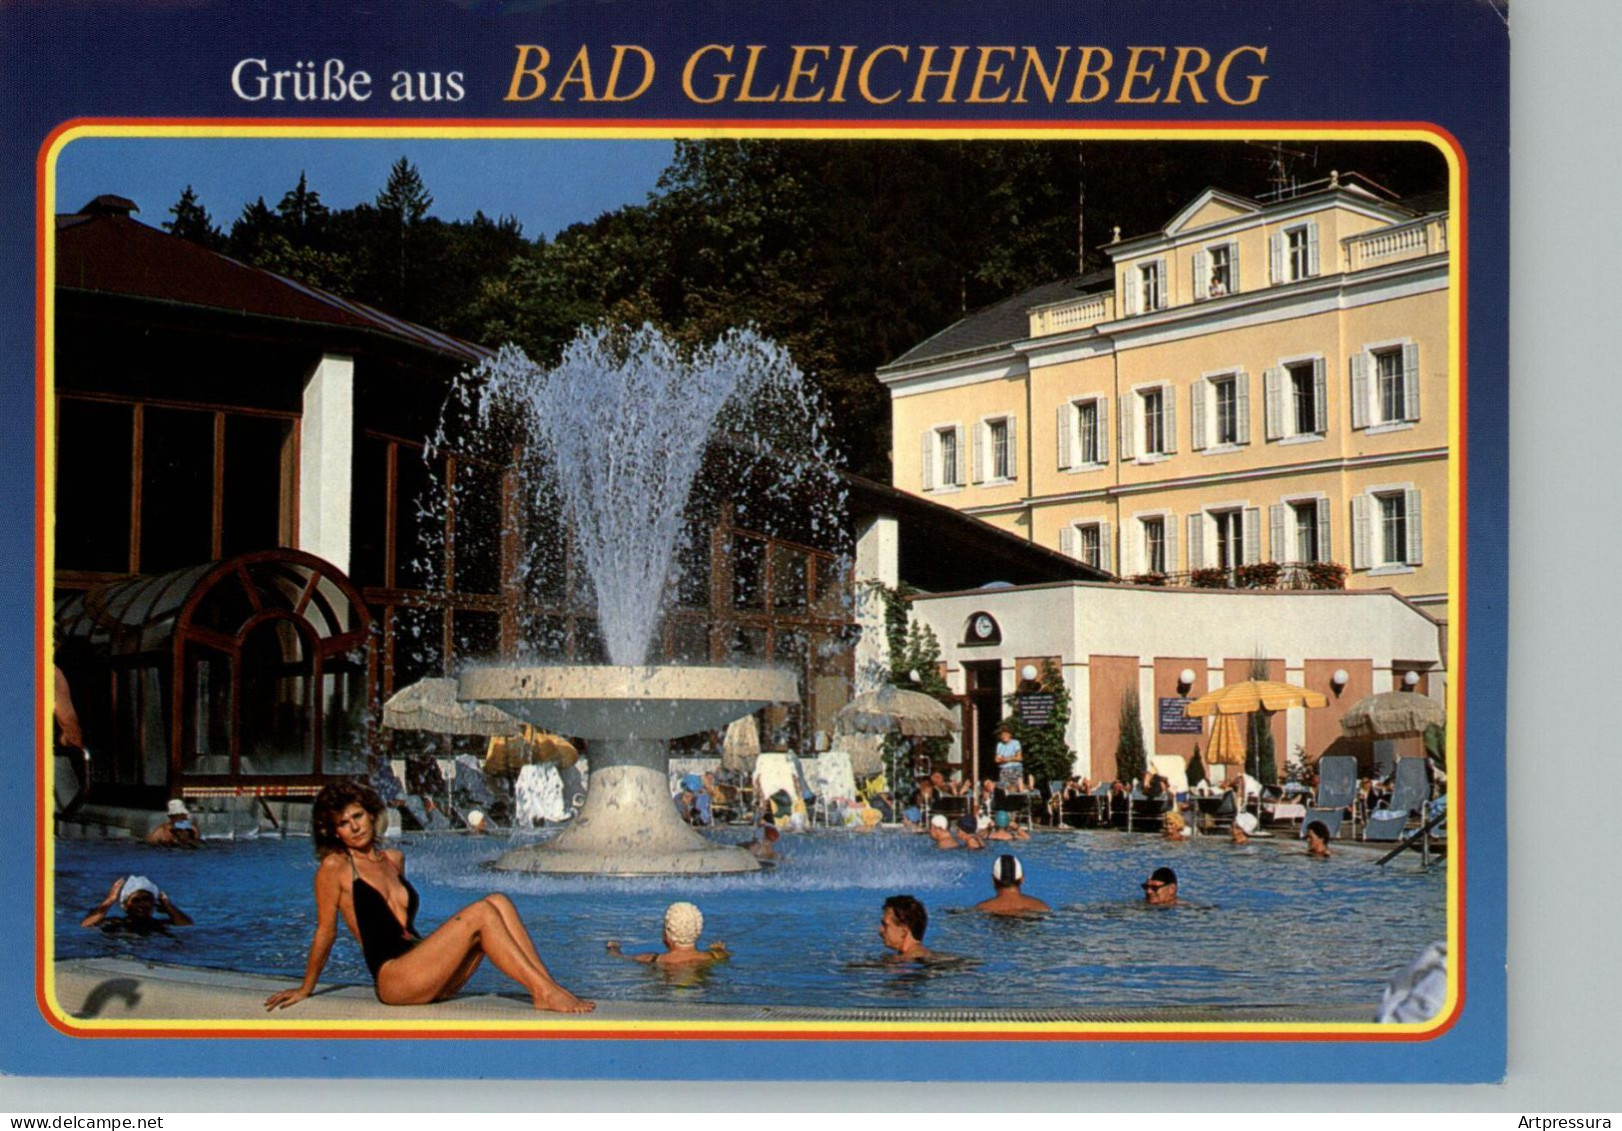 AK - Bad Gleichenberg - Heilbad - Sondermarke - 1989 - 10x 15cm - #AK1105# - Bad Gleichenberg